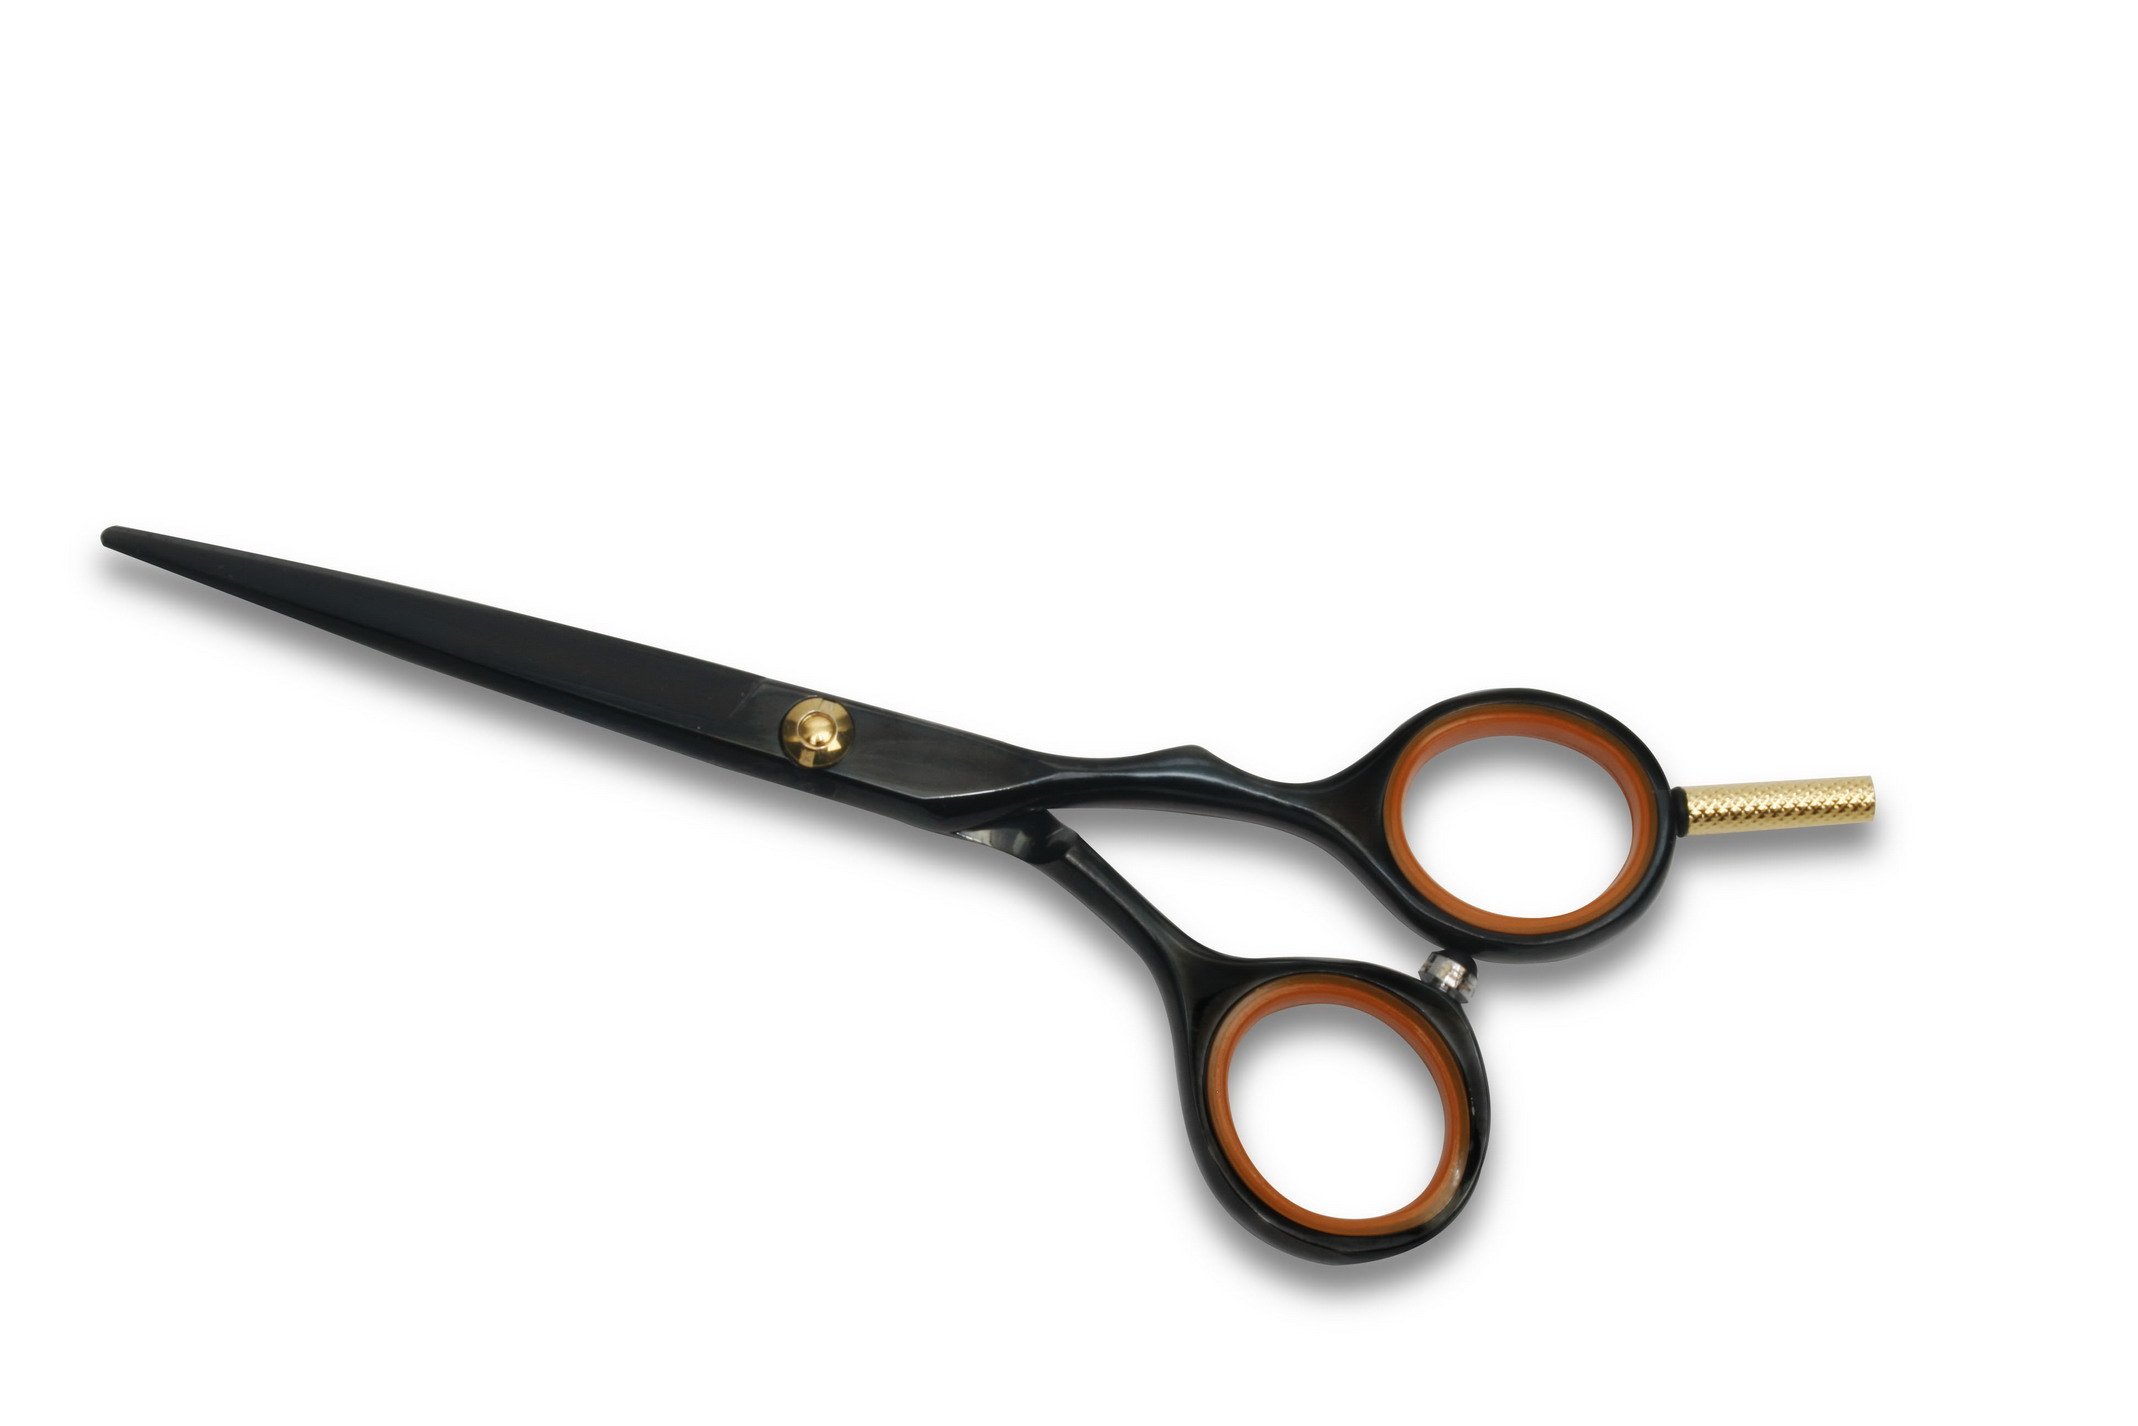 Hair Scissors/hair Cutting Scissors - Buy Professional Barber ...